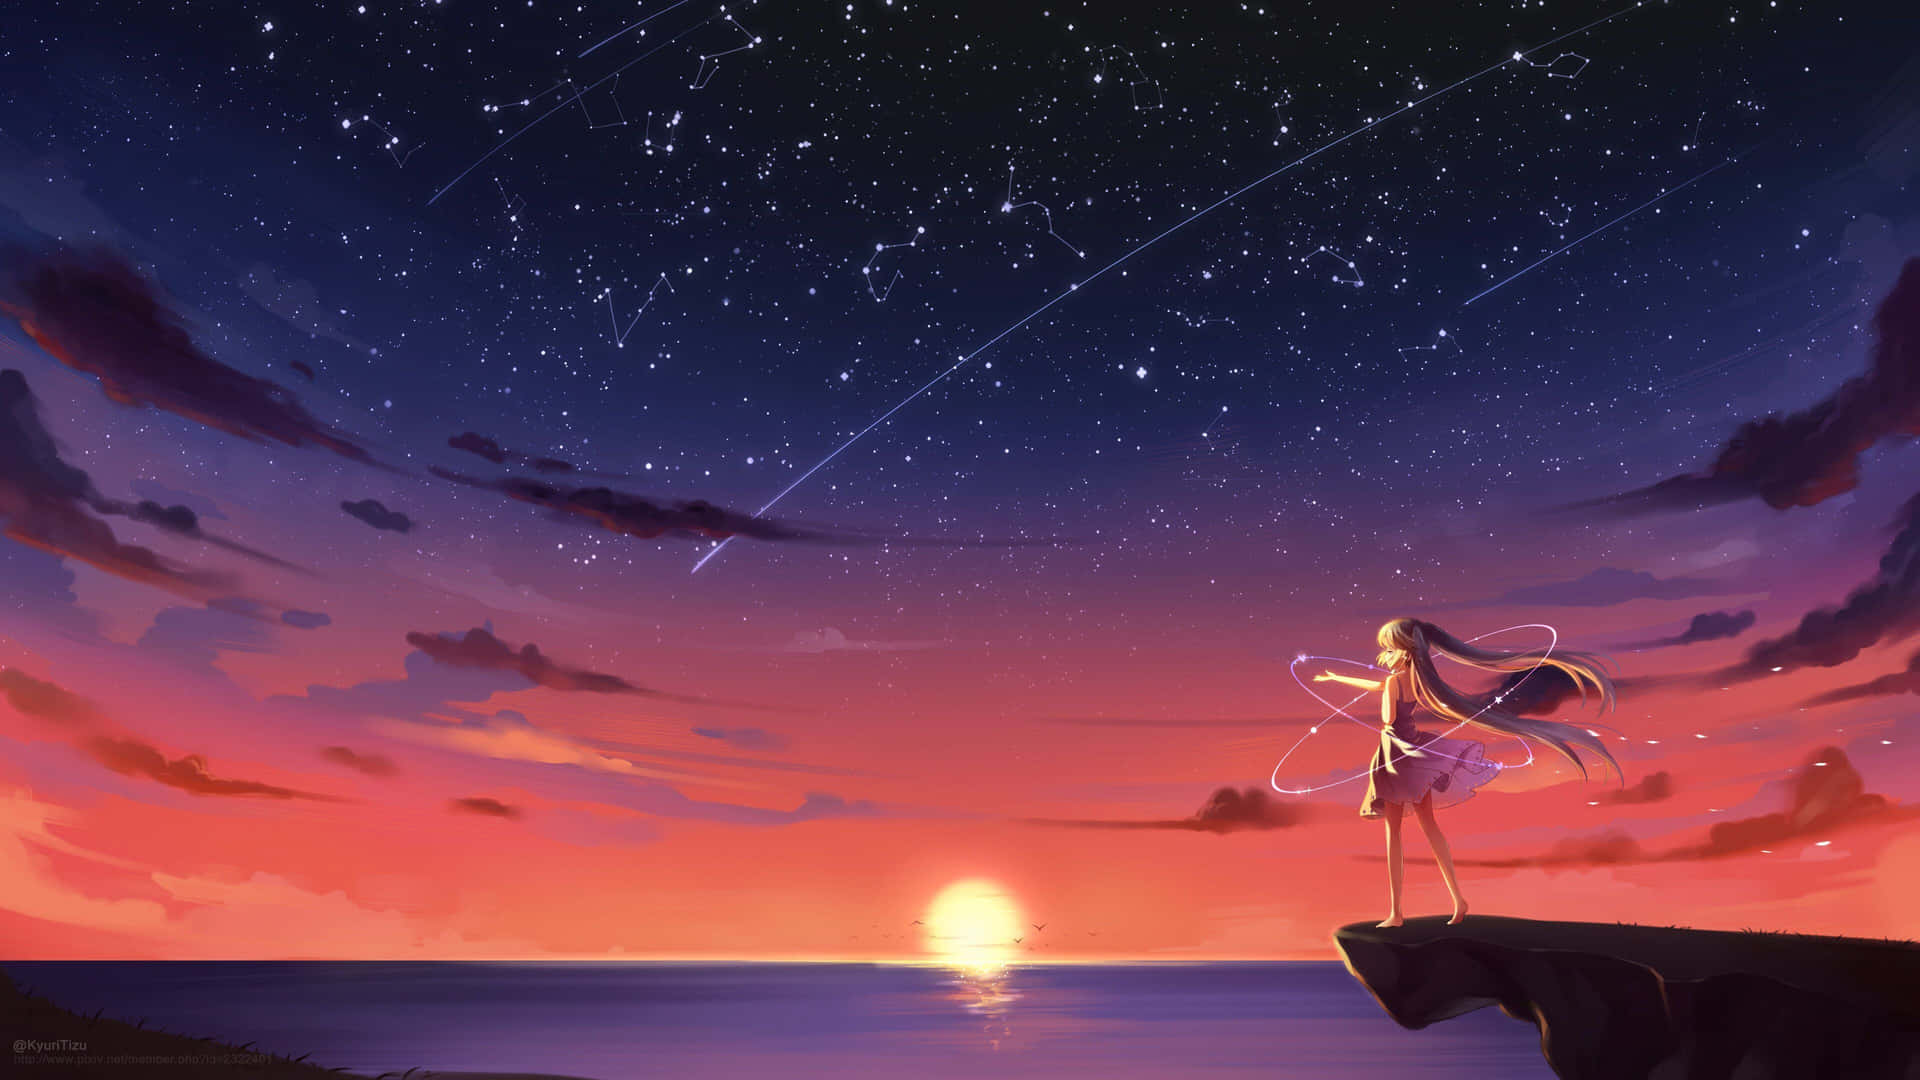 Enjoy The Beauty Of A Peaceful Anime Sunset